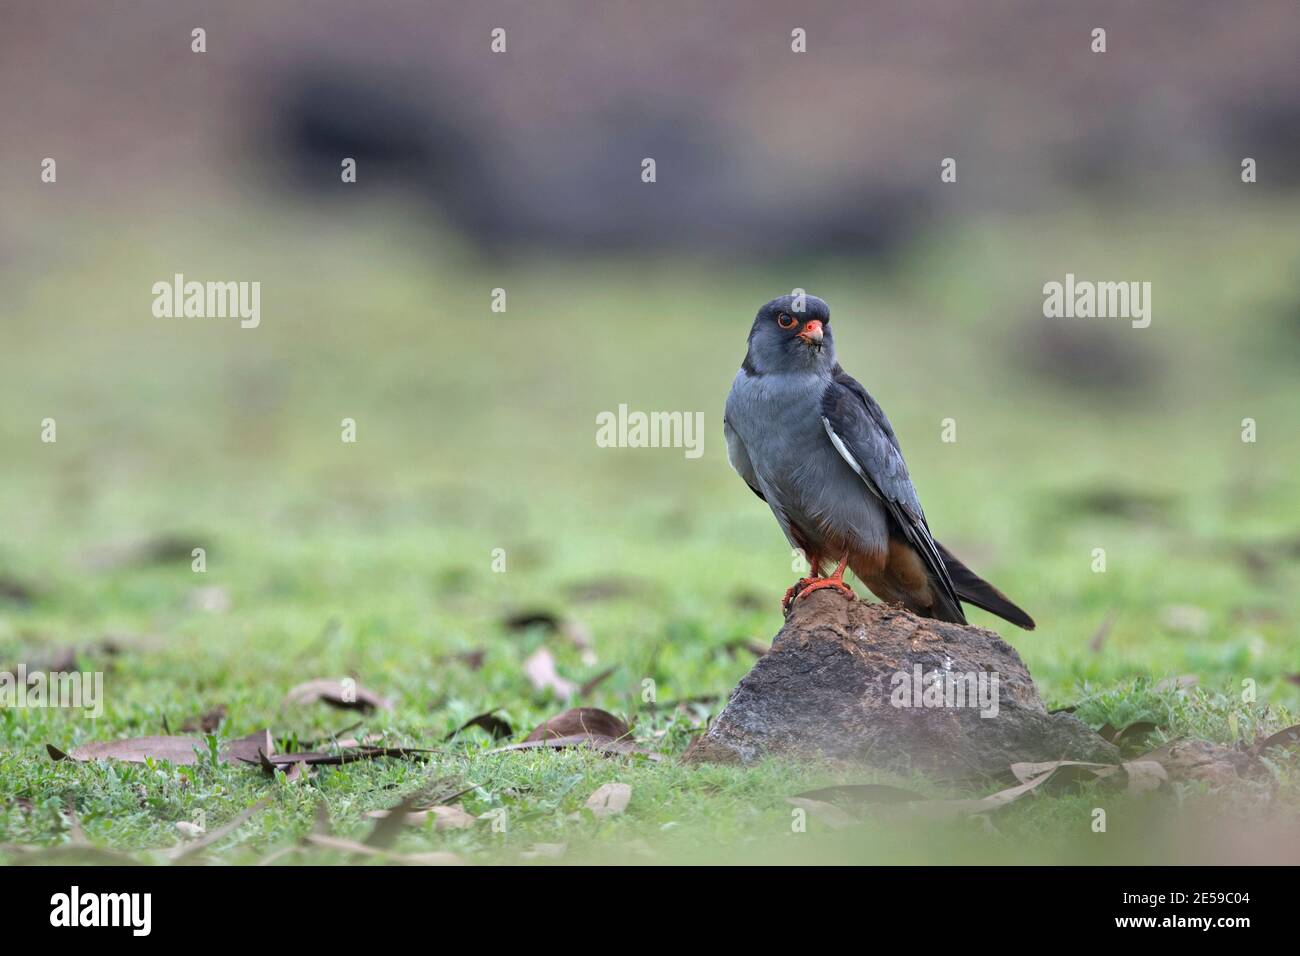 The image of  Amur falcon (Falco amurensis) was taken at  Lonavala, Maharashtra, India Stock Photo